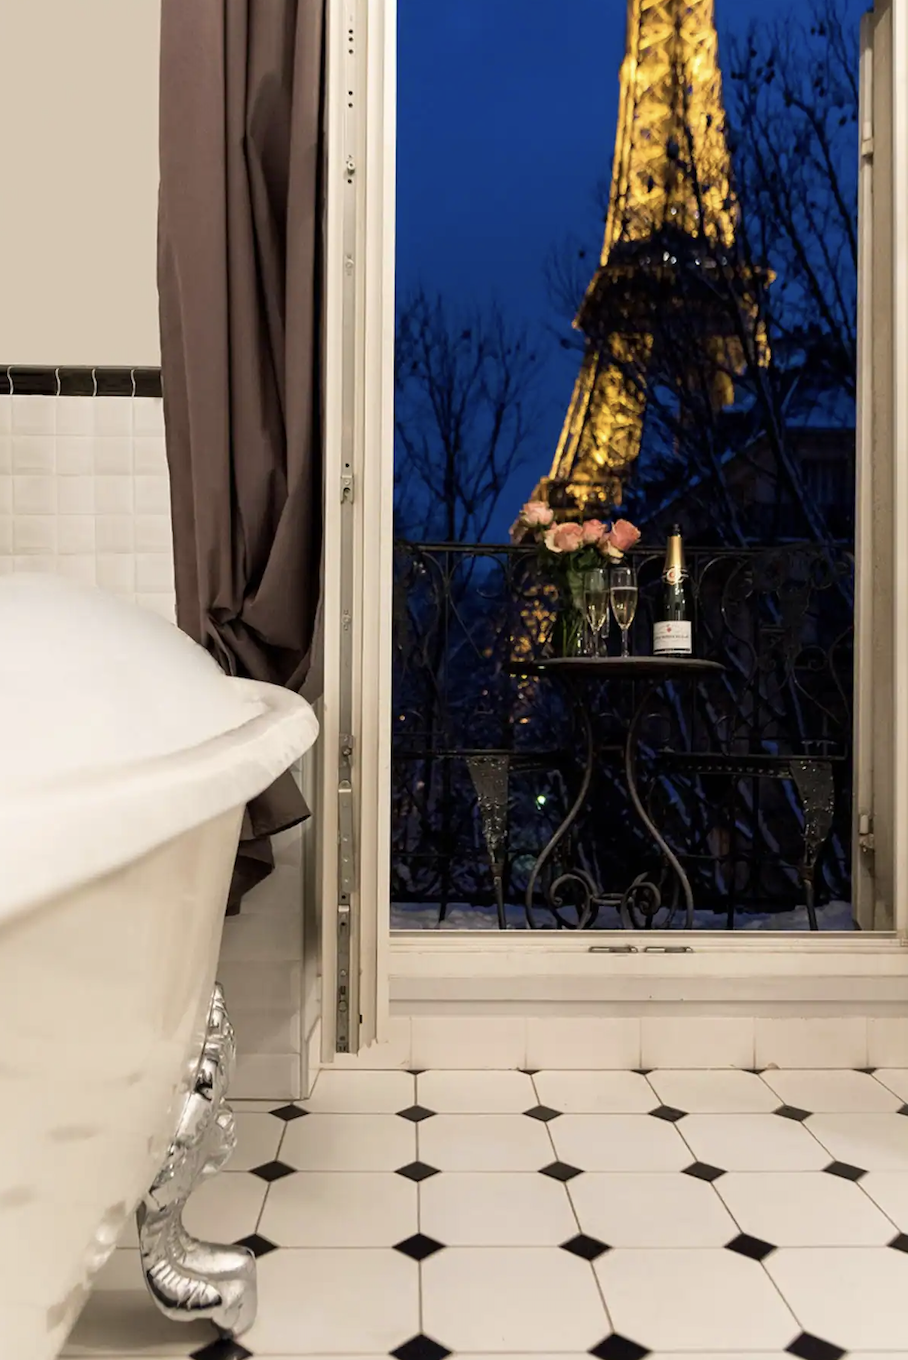 Chambertin Paris Airbnb view from bathtub of Eiffel Tower